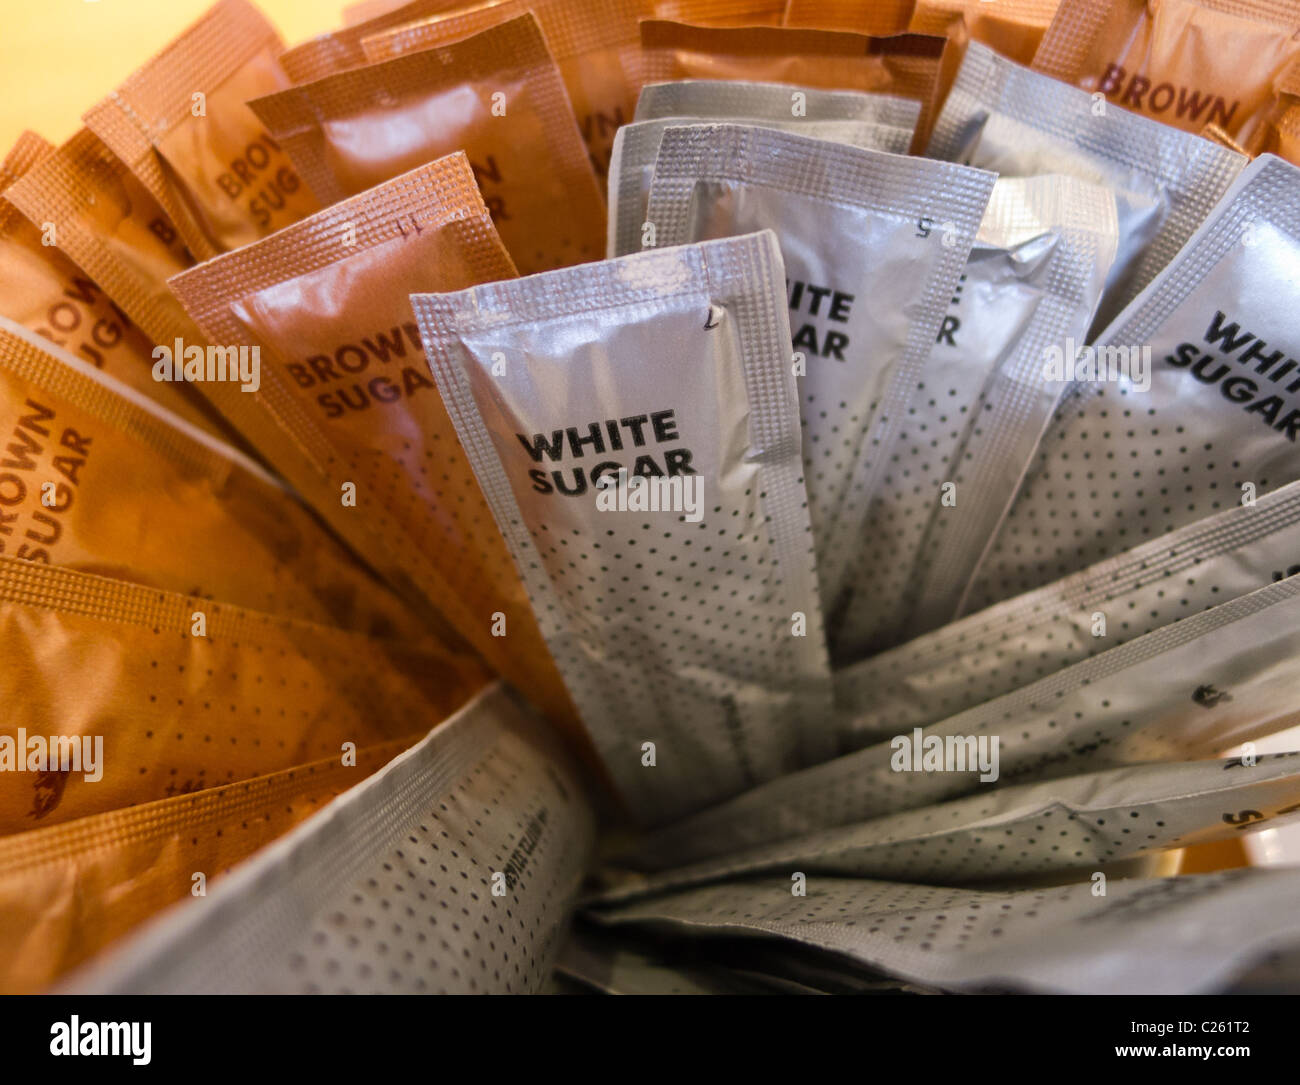 White and brown sugar sachets Stock Photo